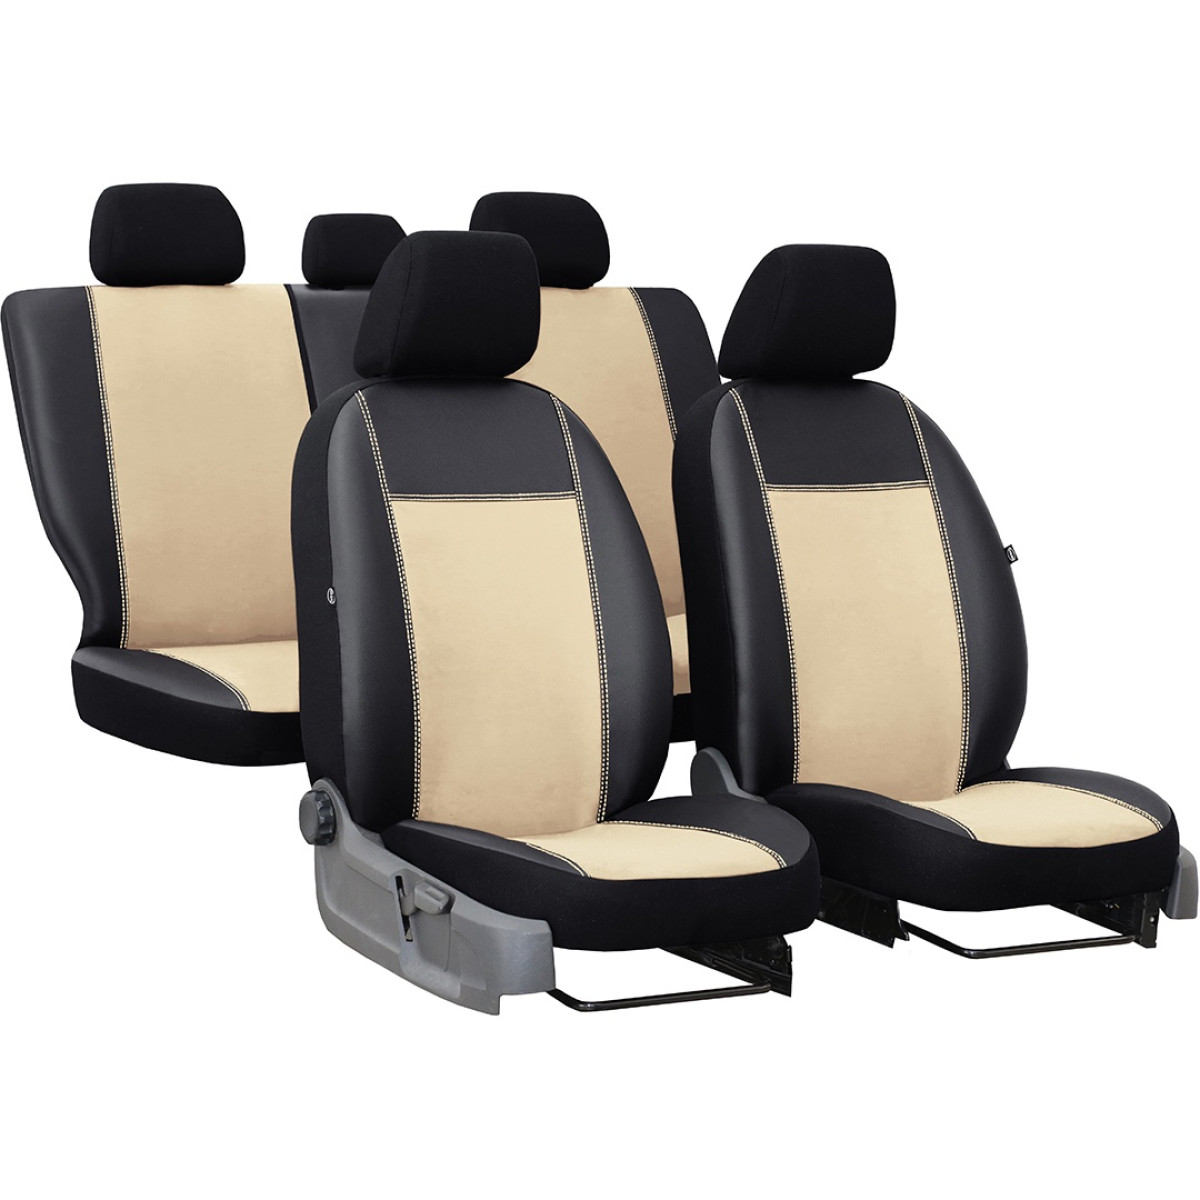 EXCLUSIVE sitzbezüge (öko-leder, alcantara) Volkswagen Caddy V (5 sitzer)